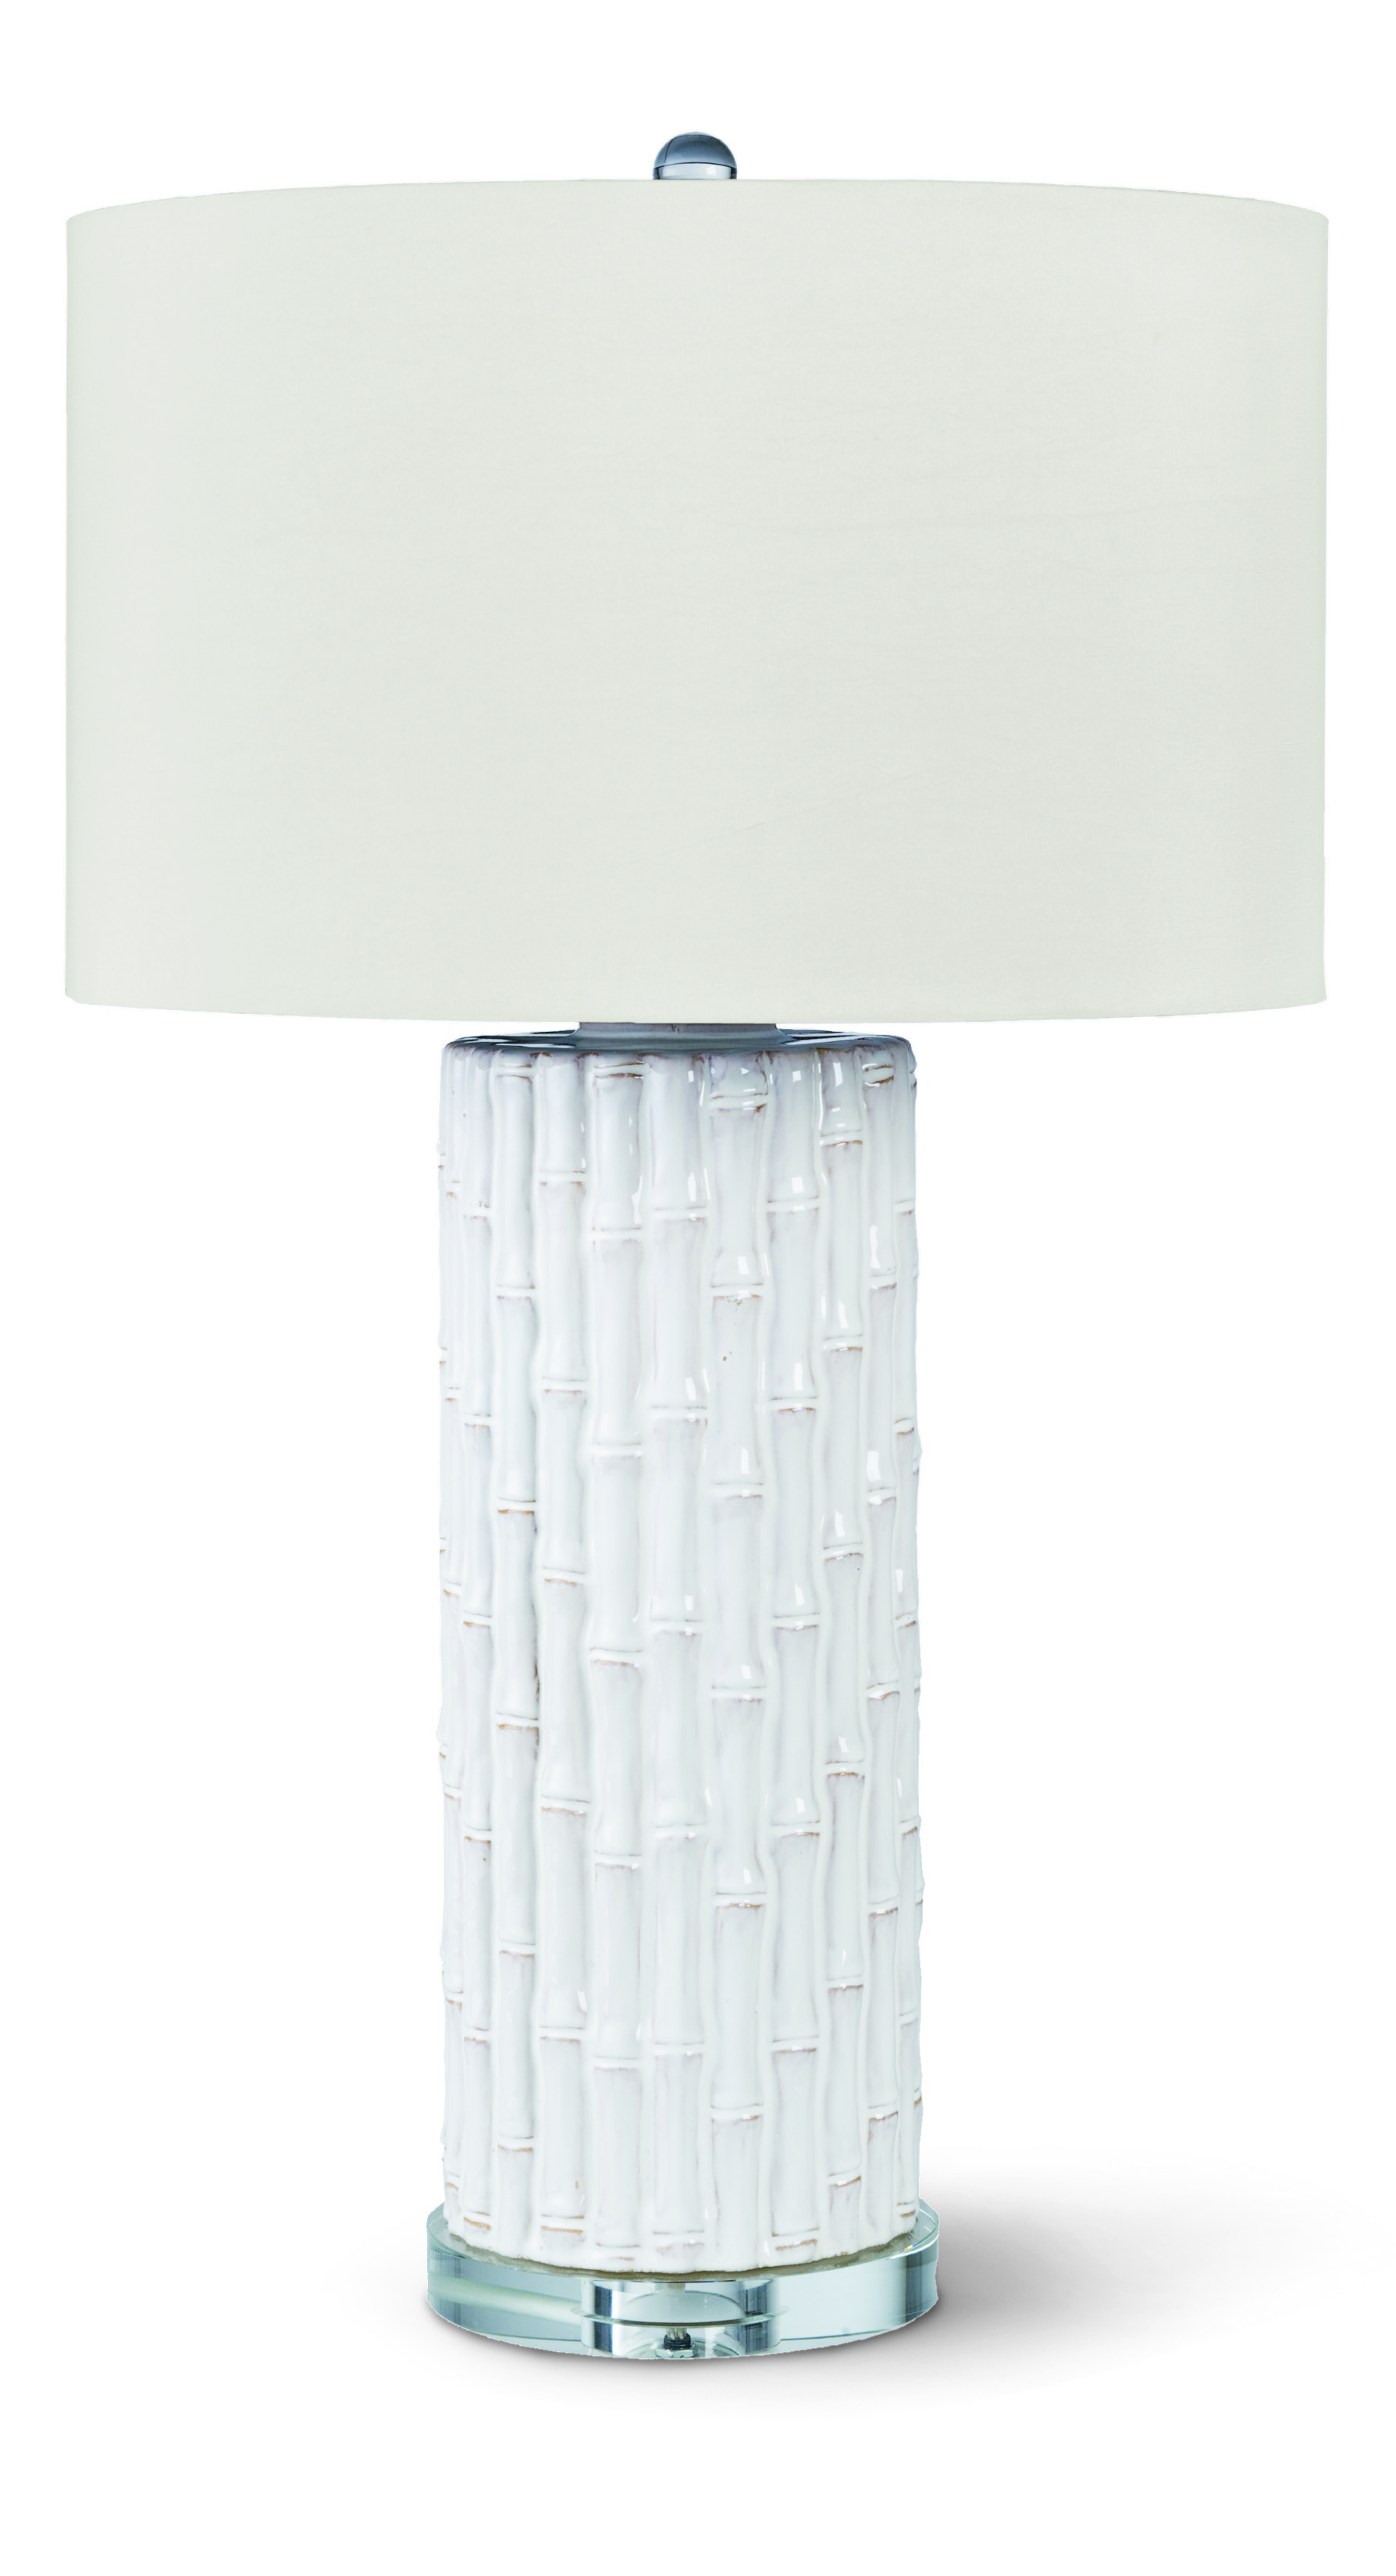 Ceramic white Bamboo lamp from Regina Andrew Design